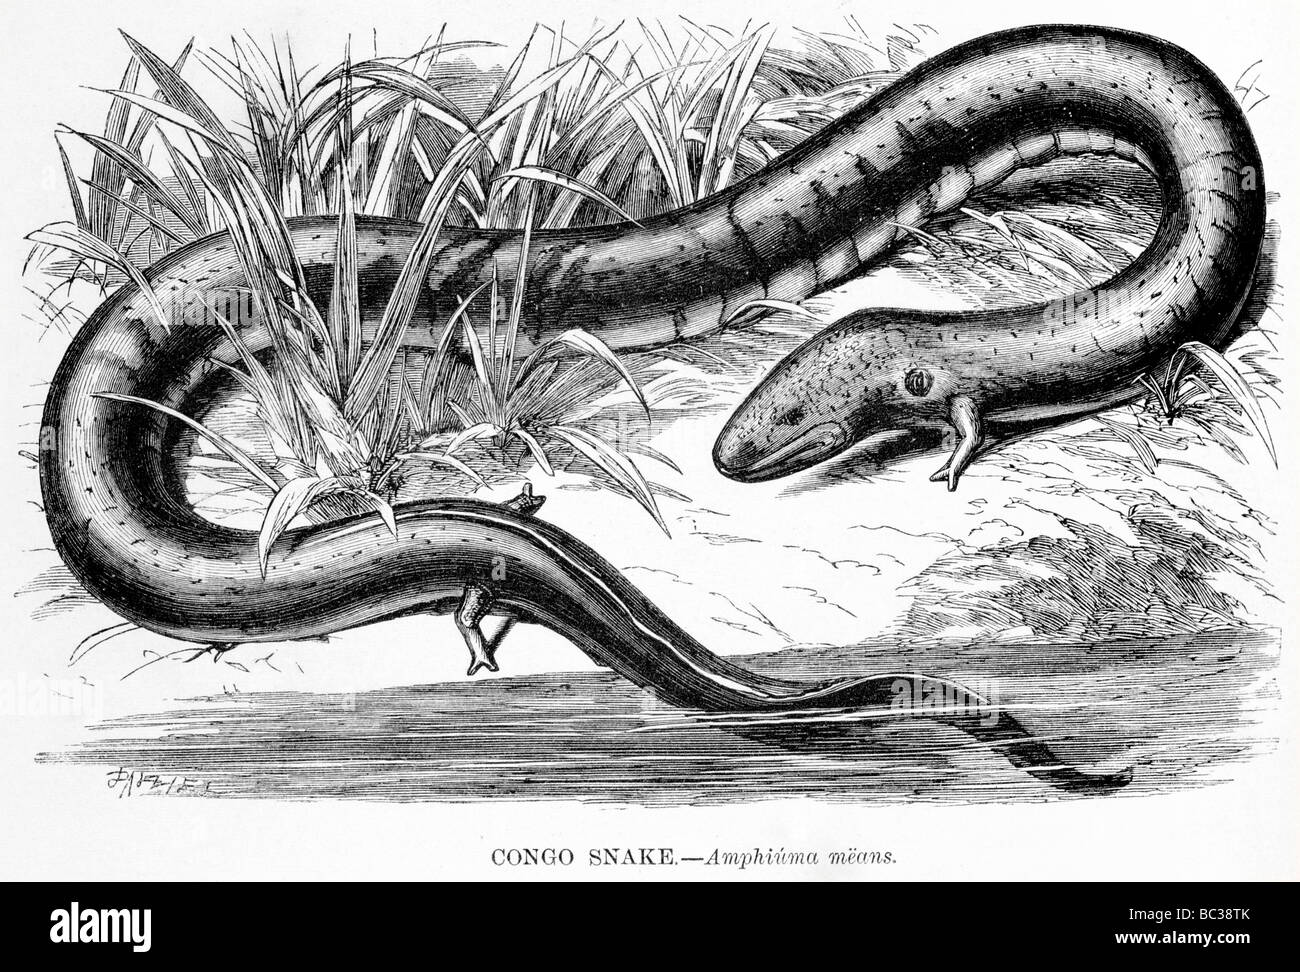 Congo snake mezzi amphiuma Foto Stock